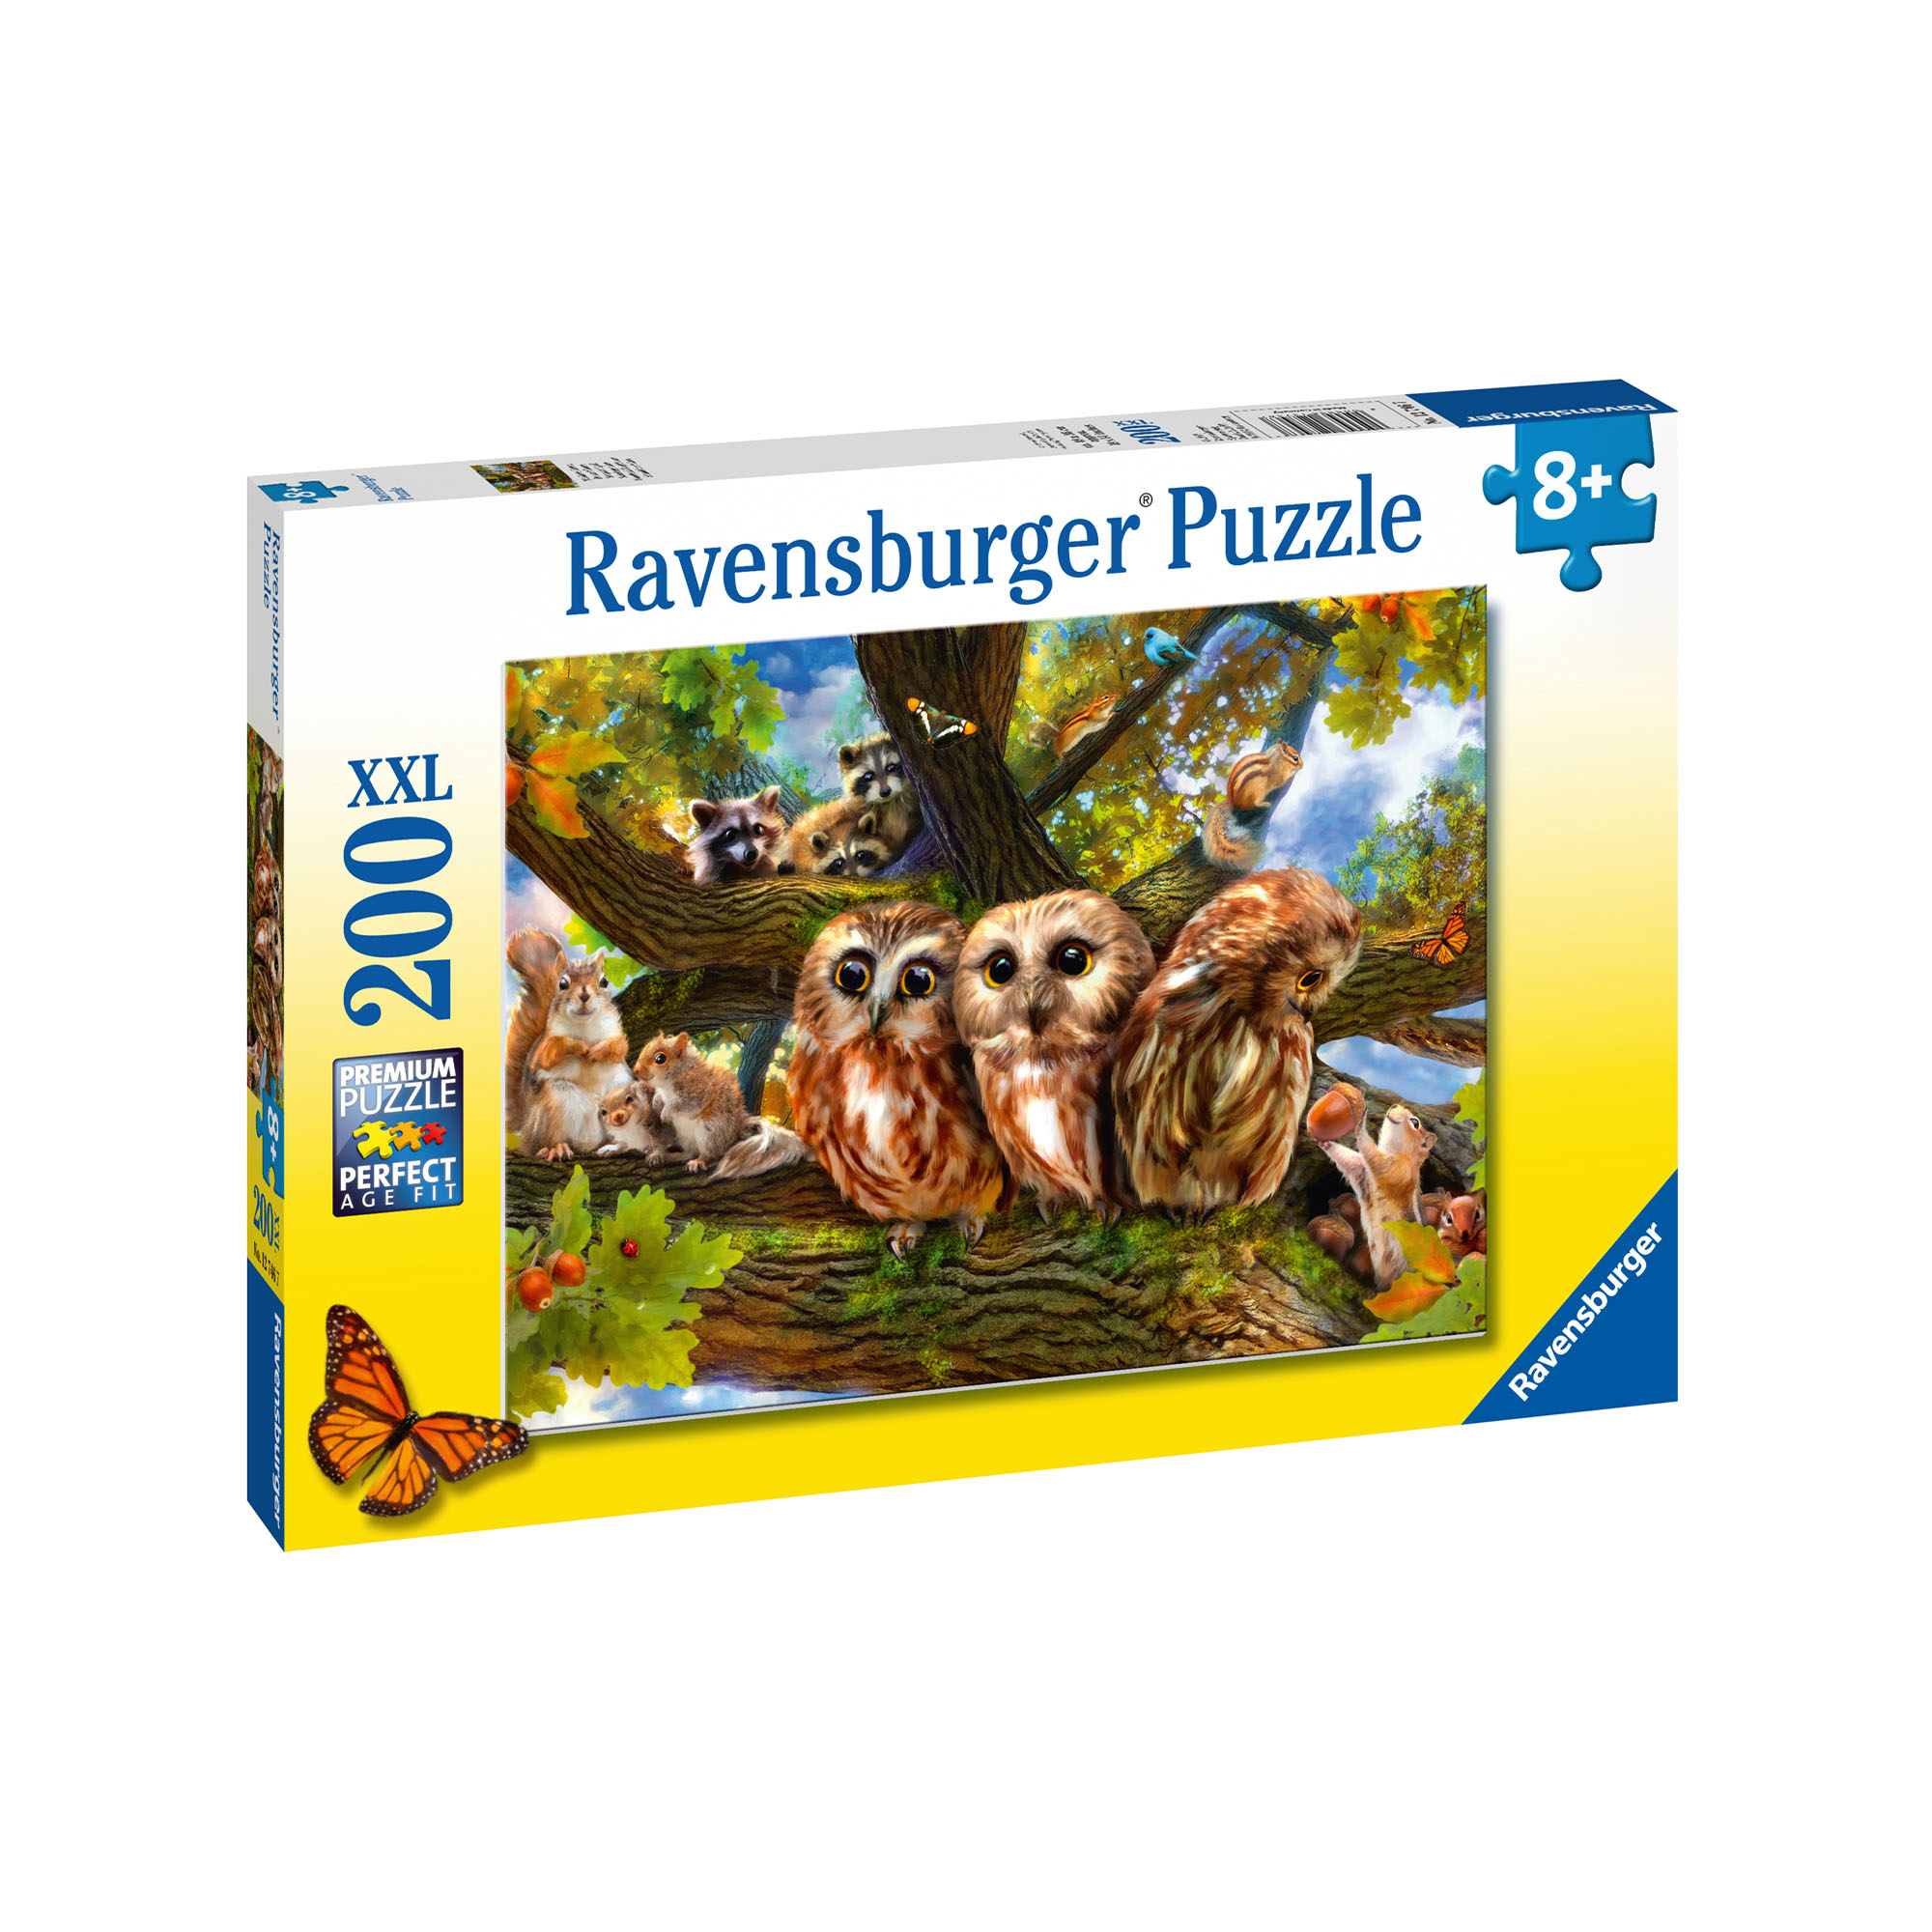 Ravensburger Puzzle 200 pezzi 12746 - Simpatici Gufi, , large